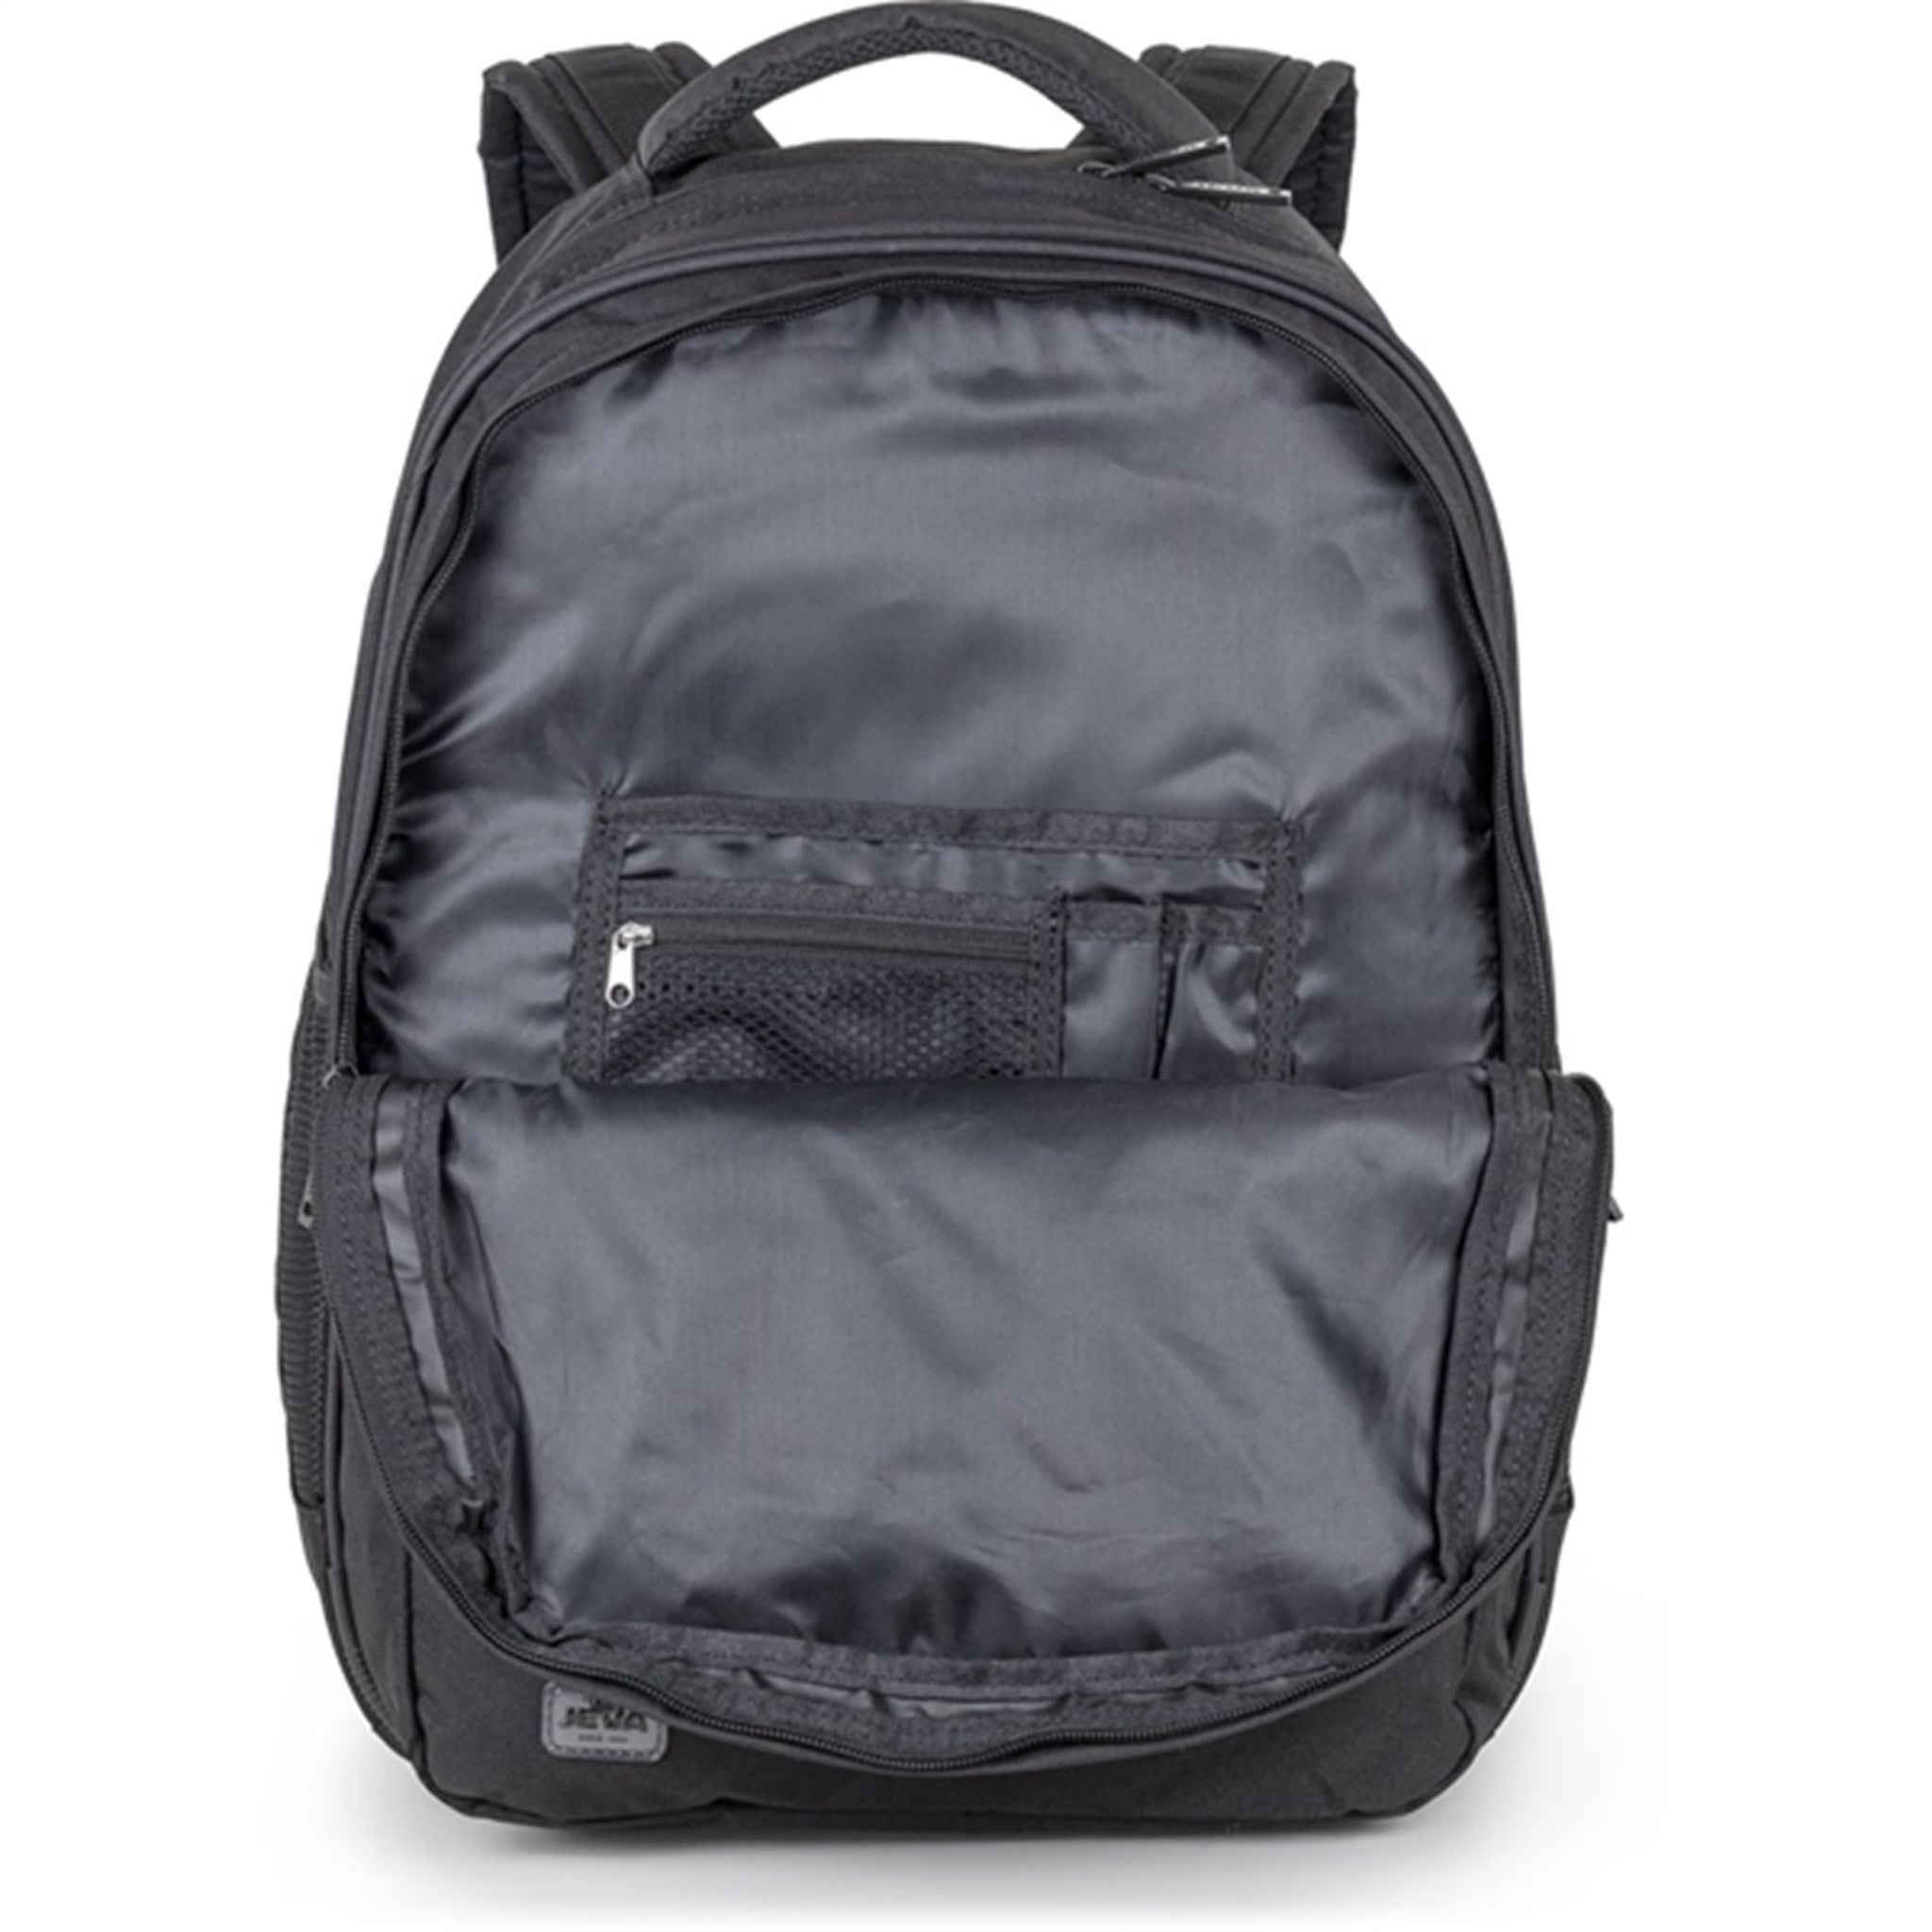 JEVA Backpack Black 4